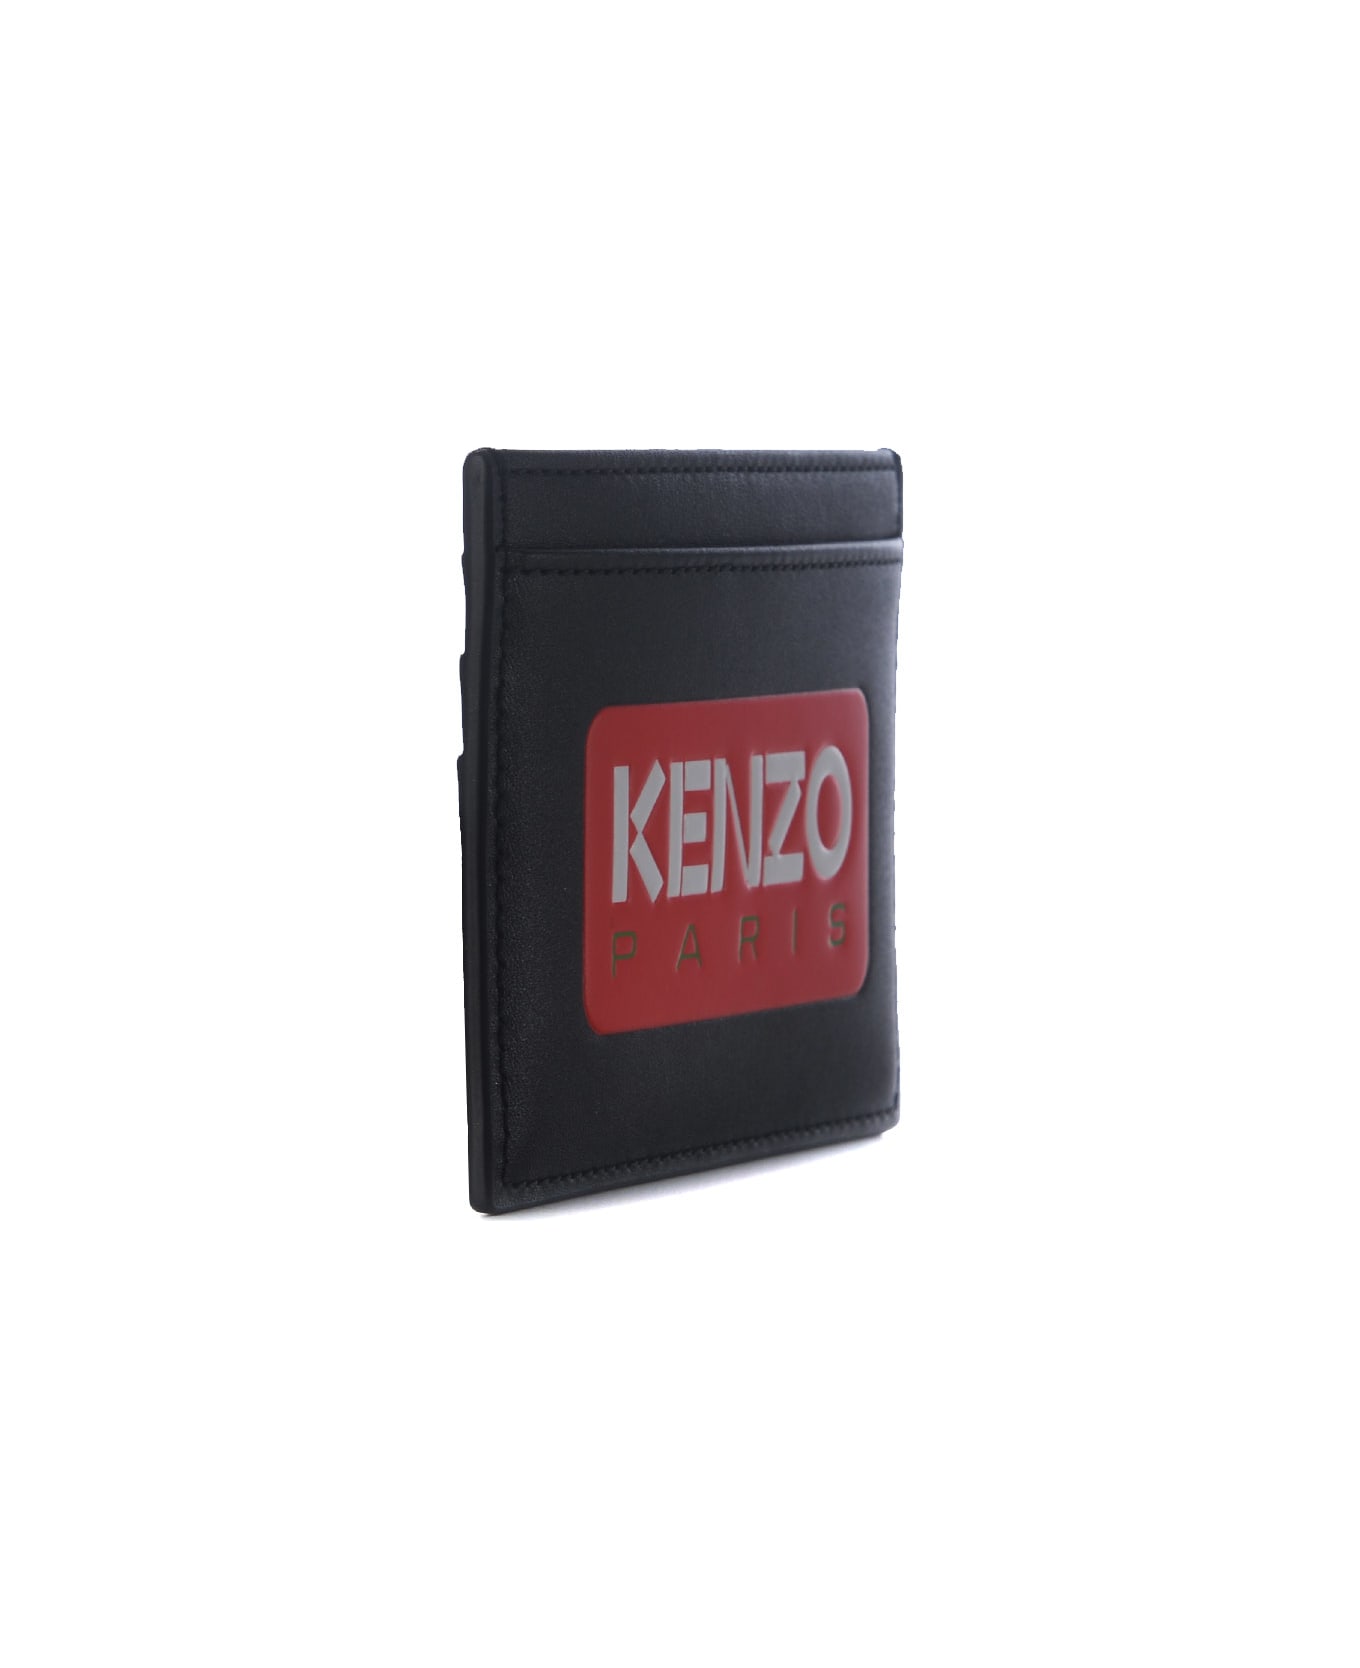 Kenzo Card Holder Kenzo "kenzo Paris" In Leather - Nero